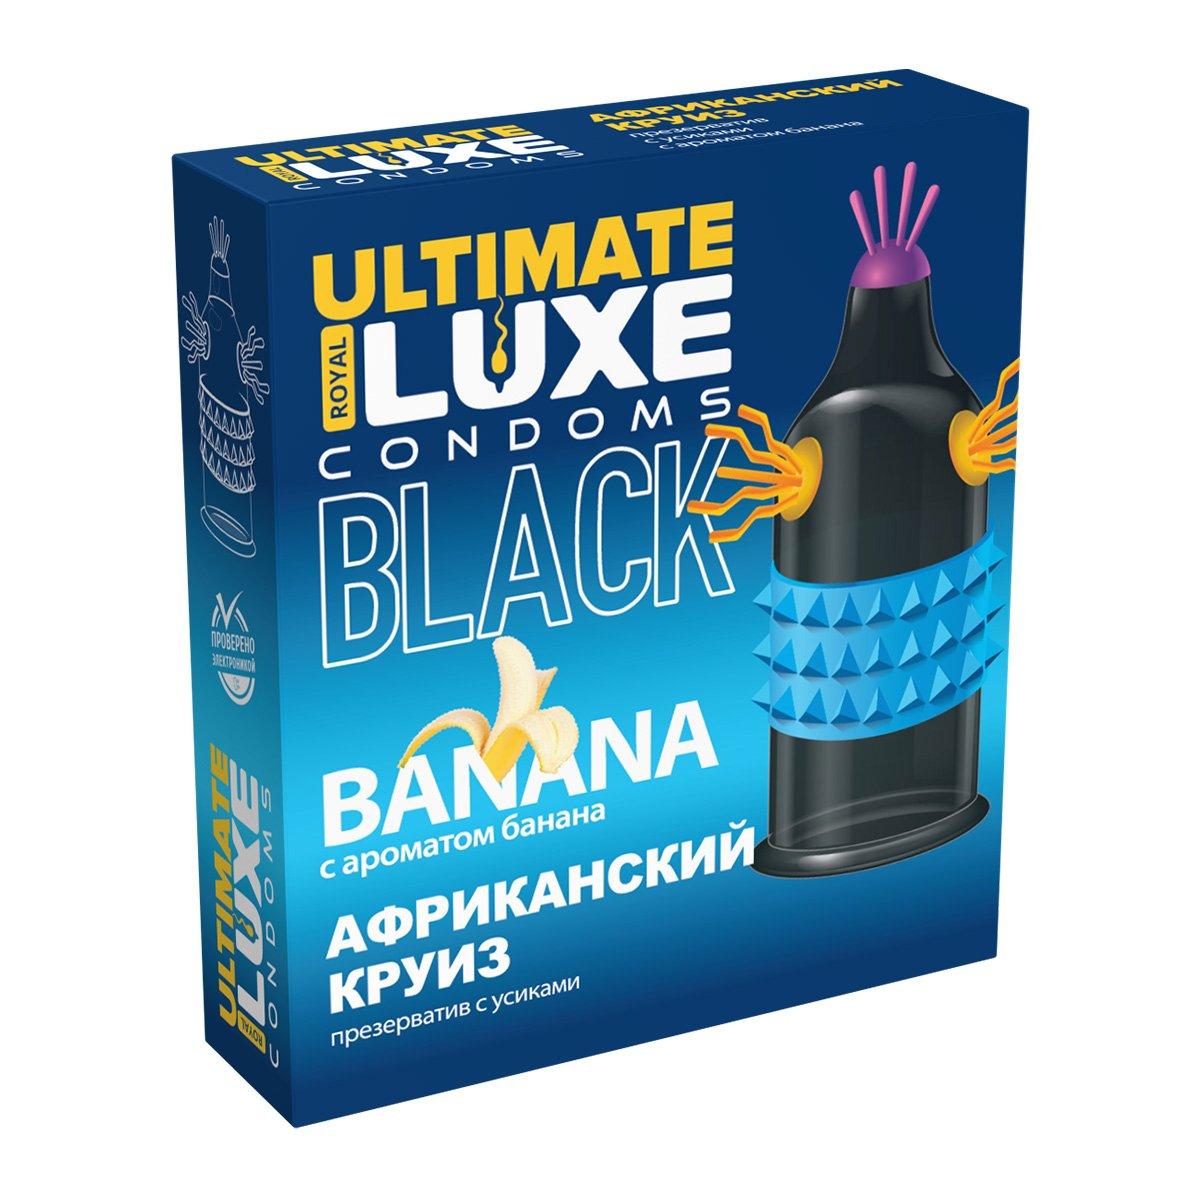 Презерватив LUXE BLACK ULTIMATE "АФРИКАНСКИЙ КРУИЗ" (с ароматом банана), 1 штука